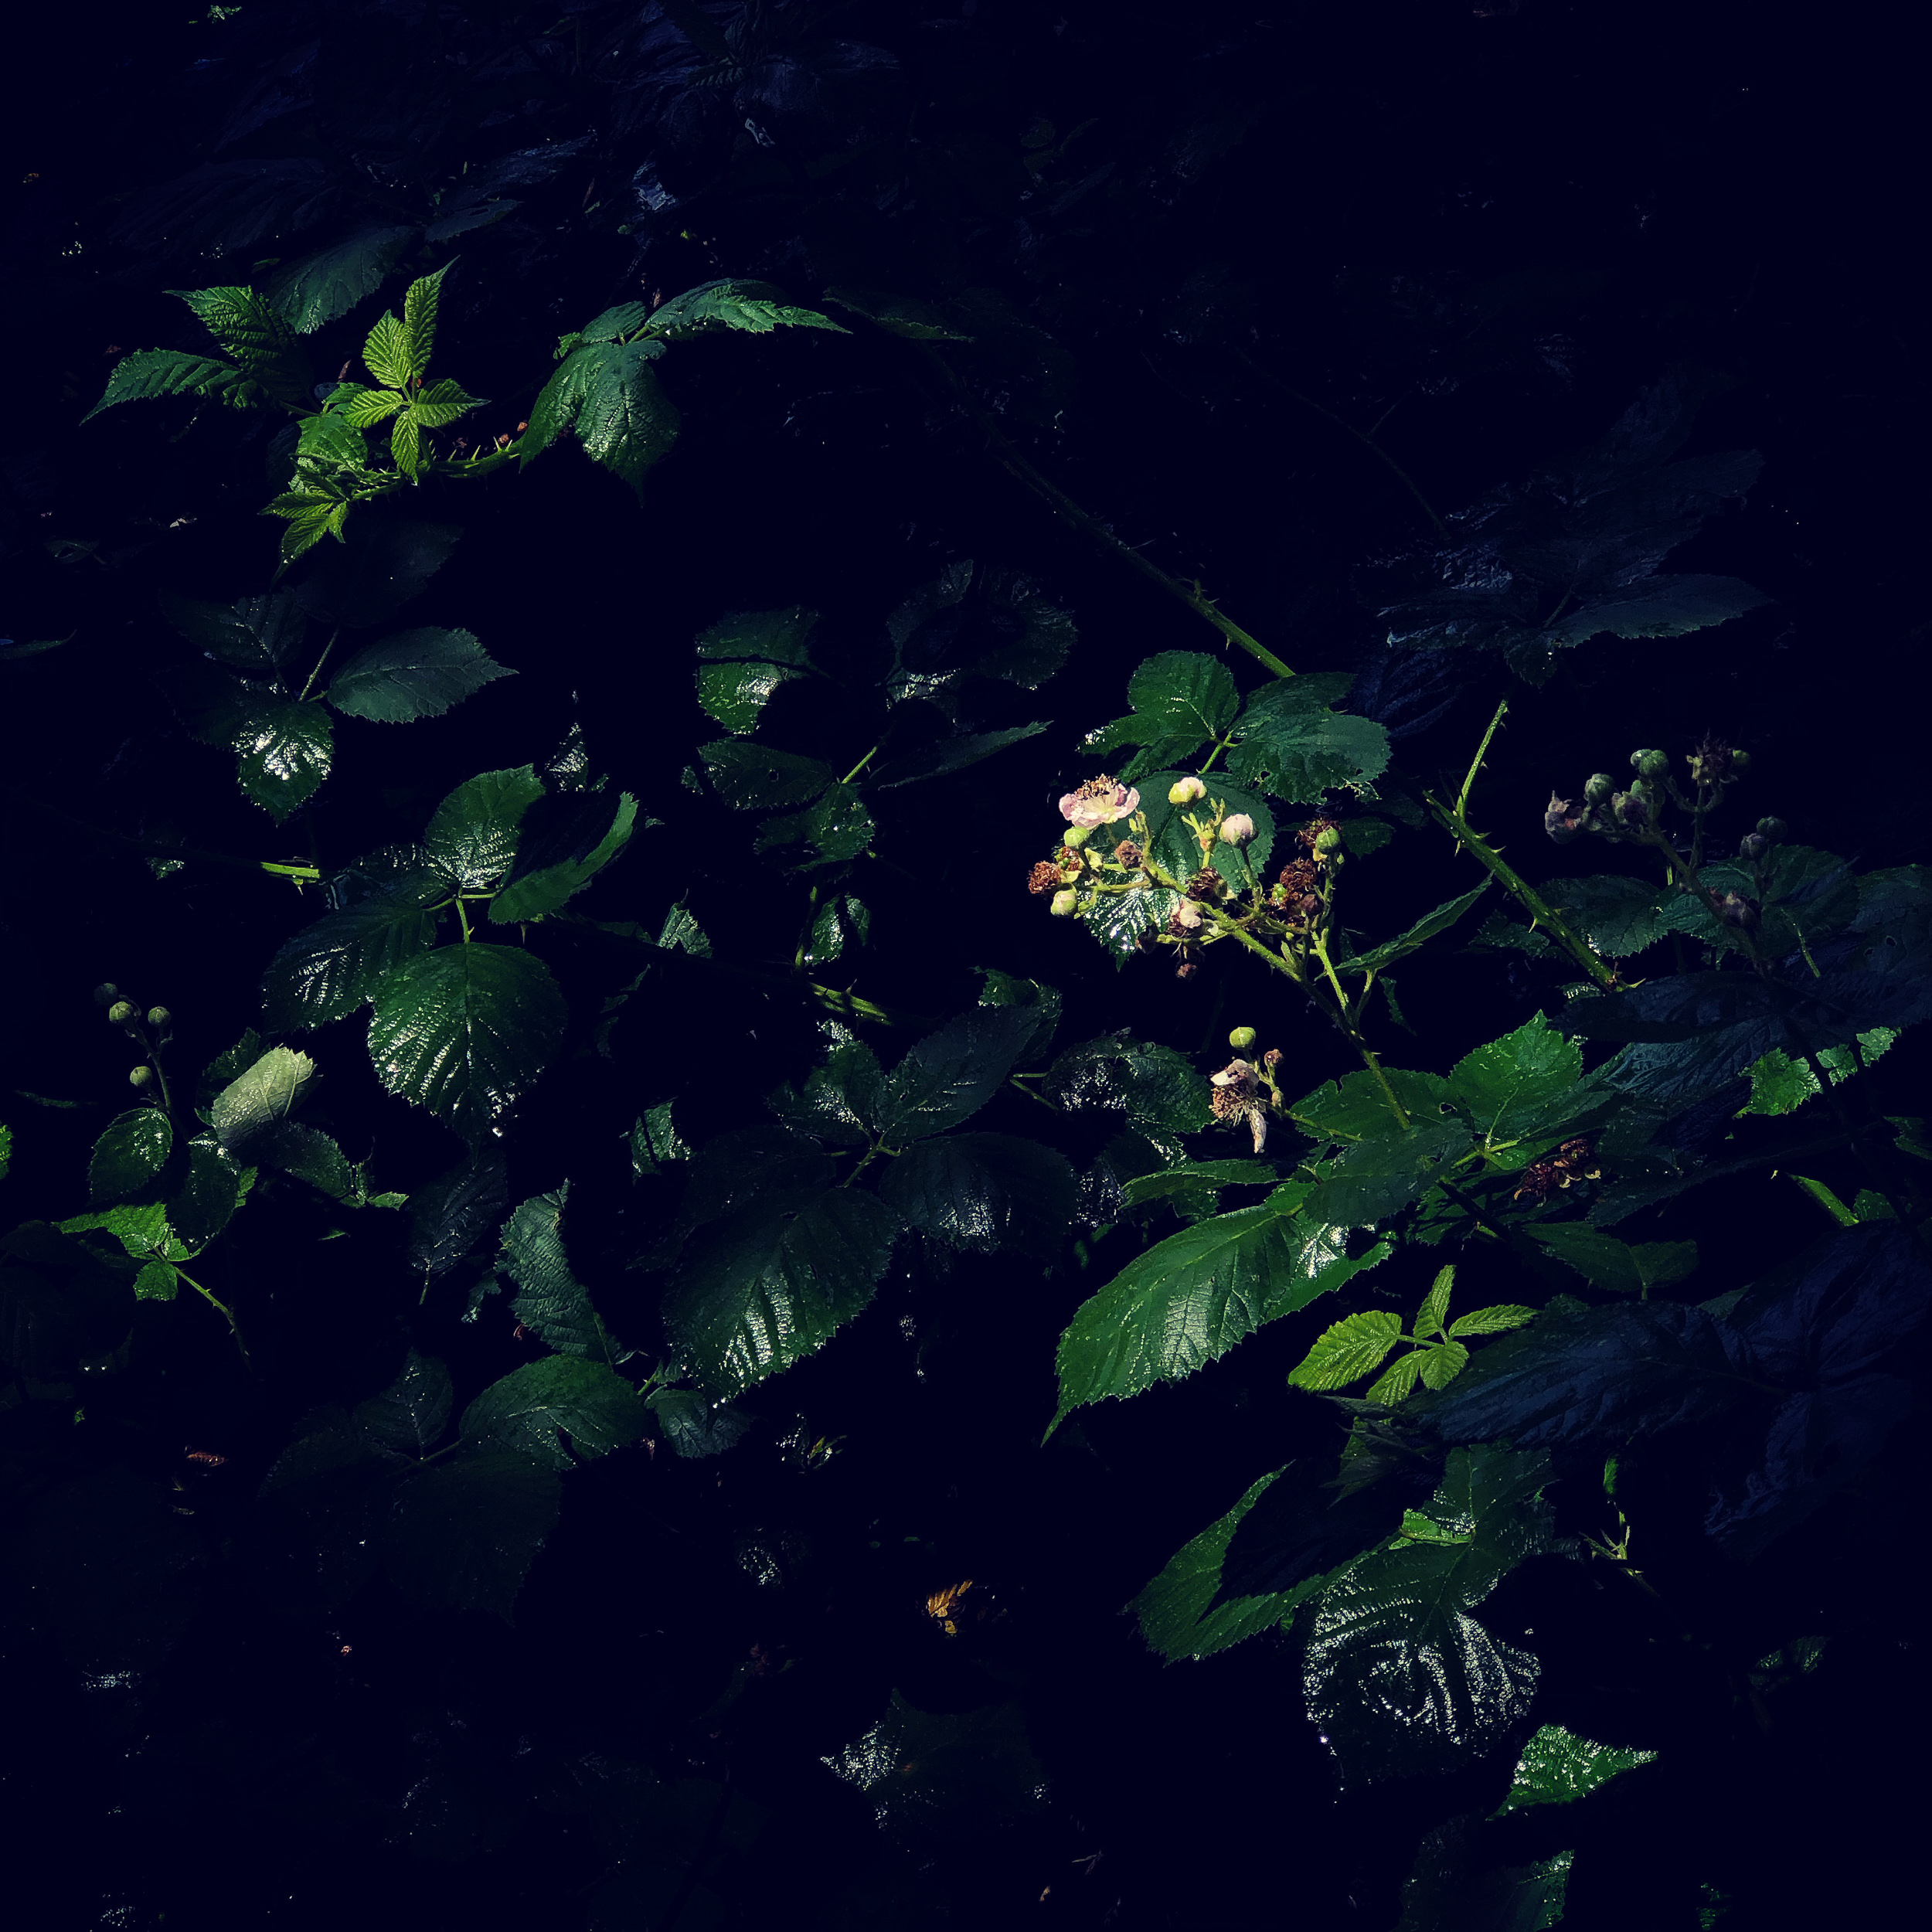 Blackberries in rainy shade